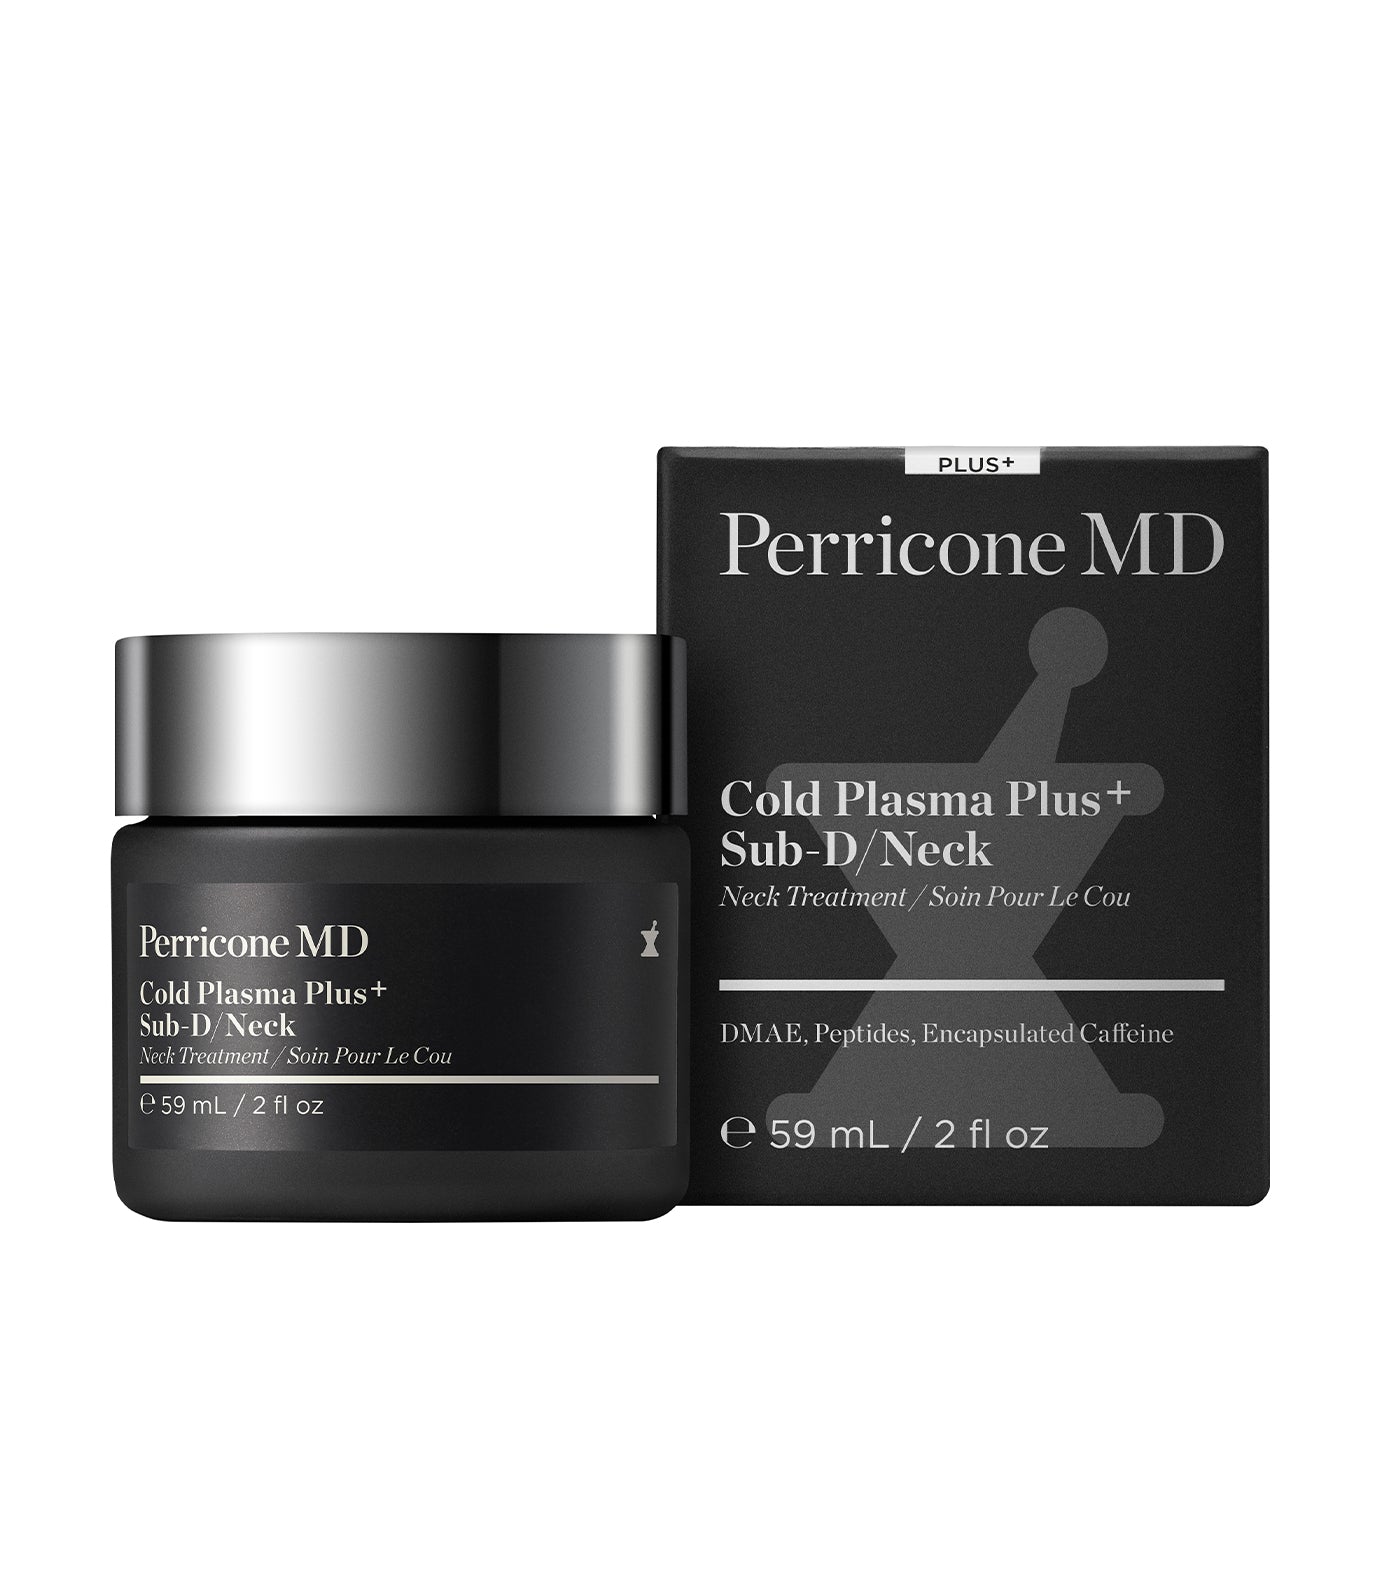 Perricone MD Cold Plasma Plus+ Sub-D/Neck